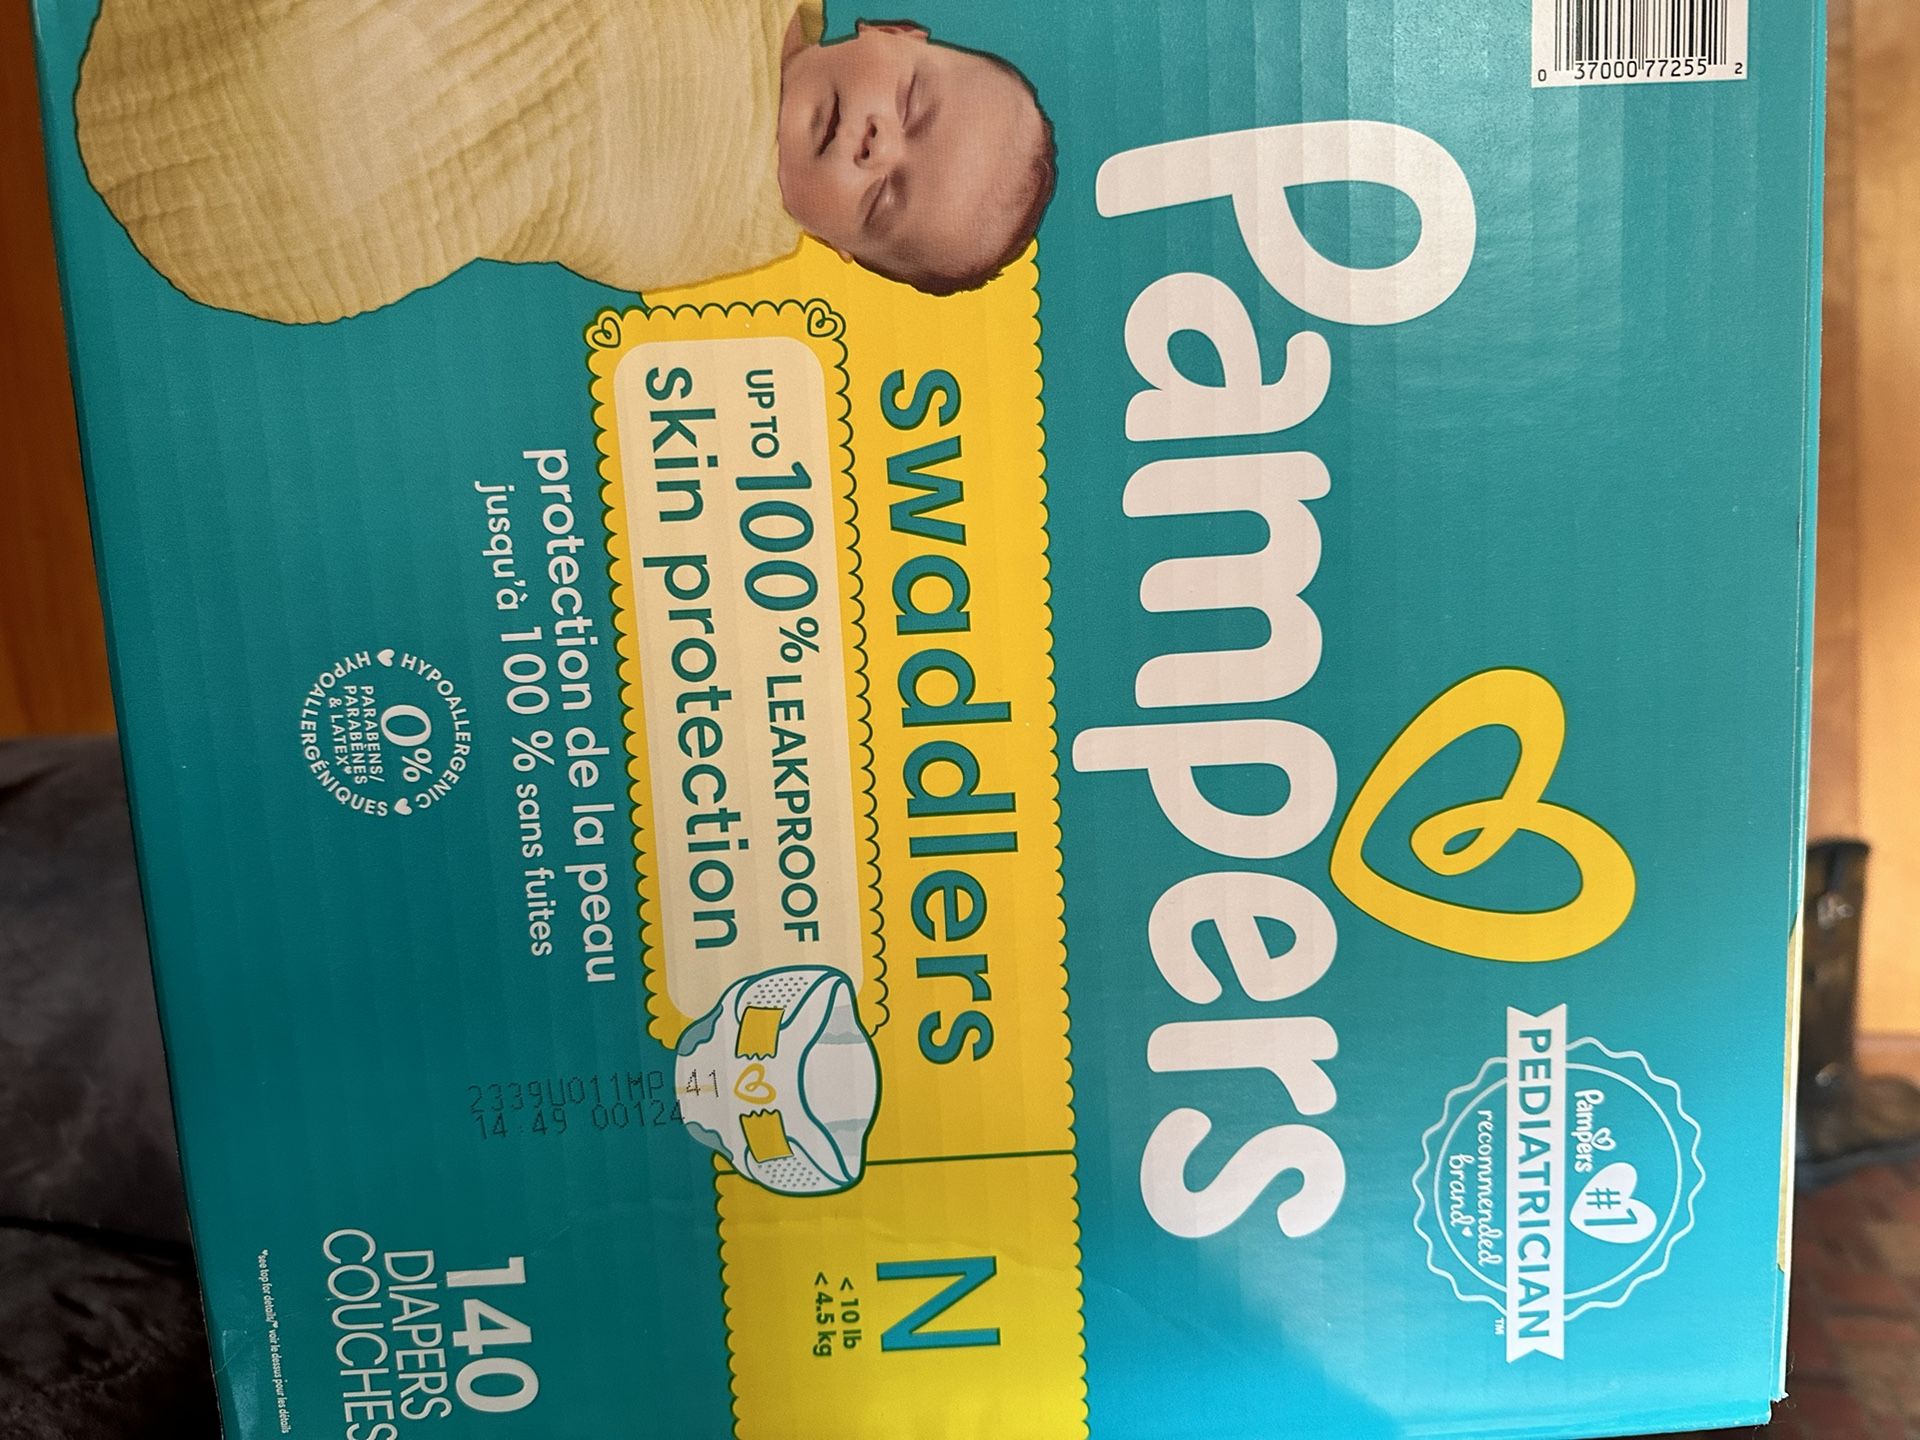 224 Newborn Pampers Diapers Unopened Box And 1 Unopened Package Pickup Garner